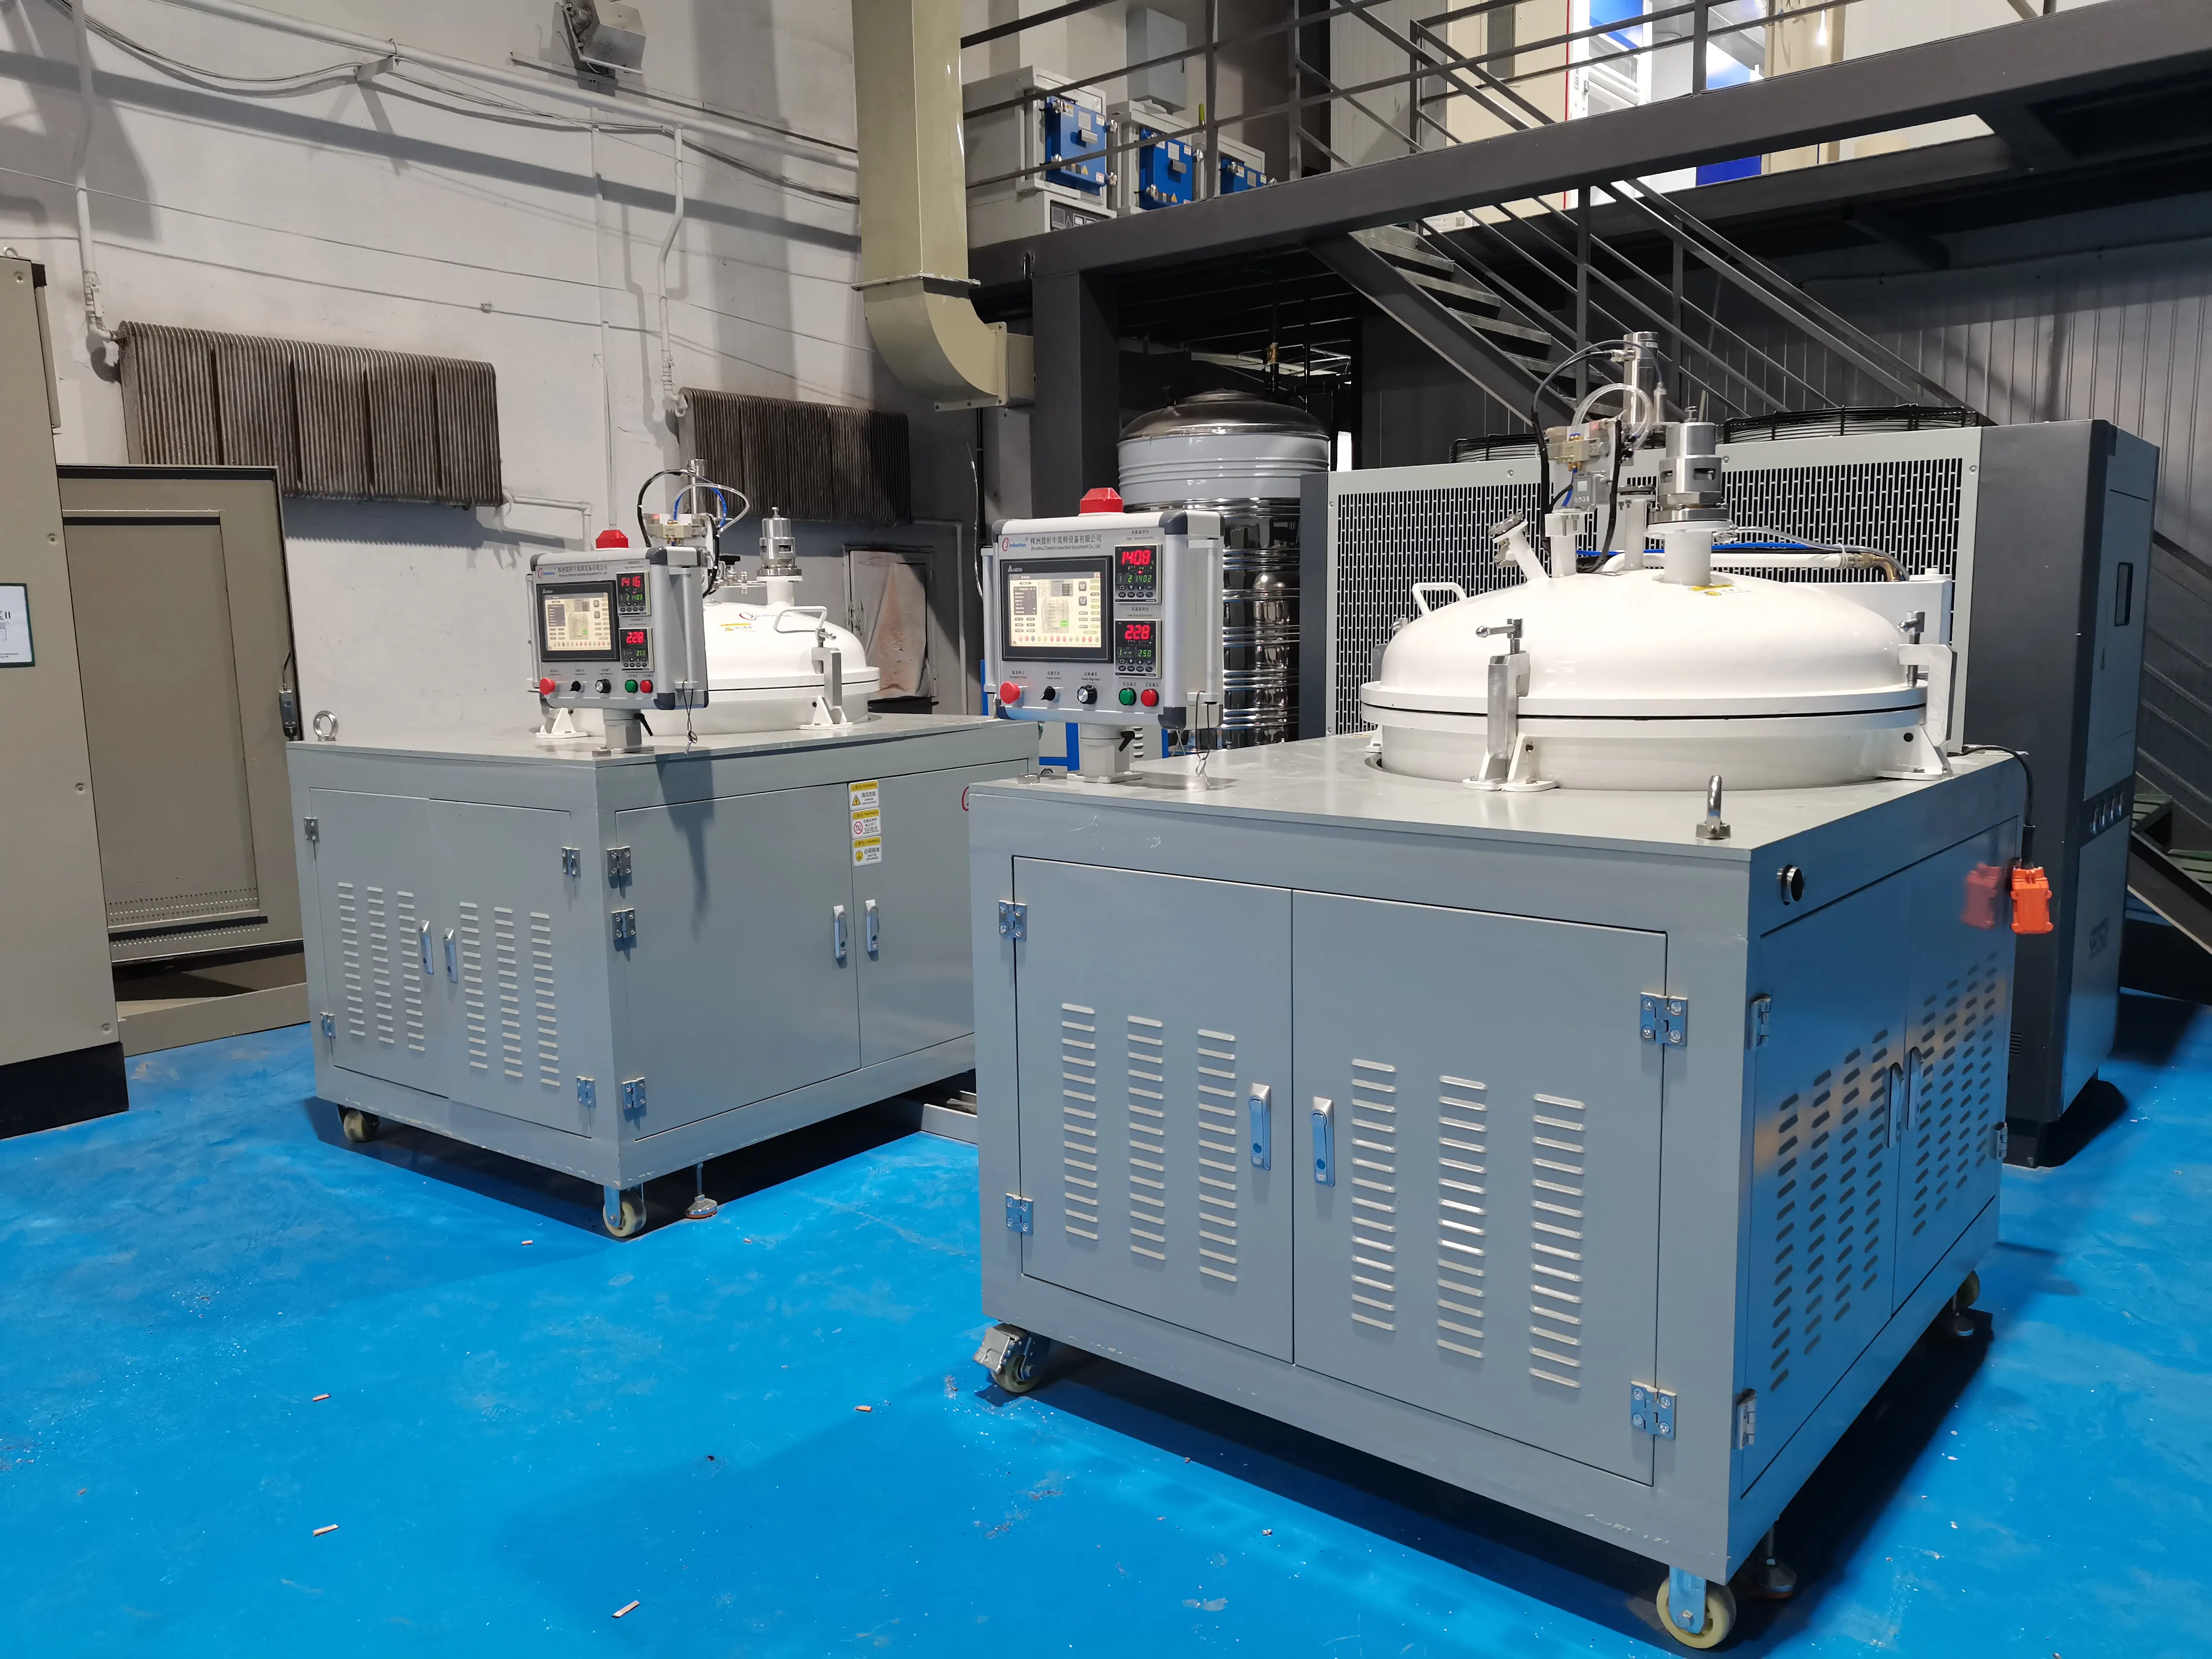 CX-Induction 2850C 3000C system laboratory graphitization furnace